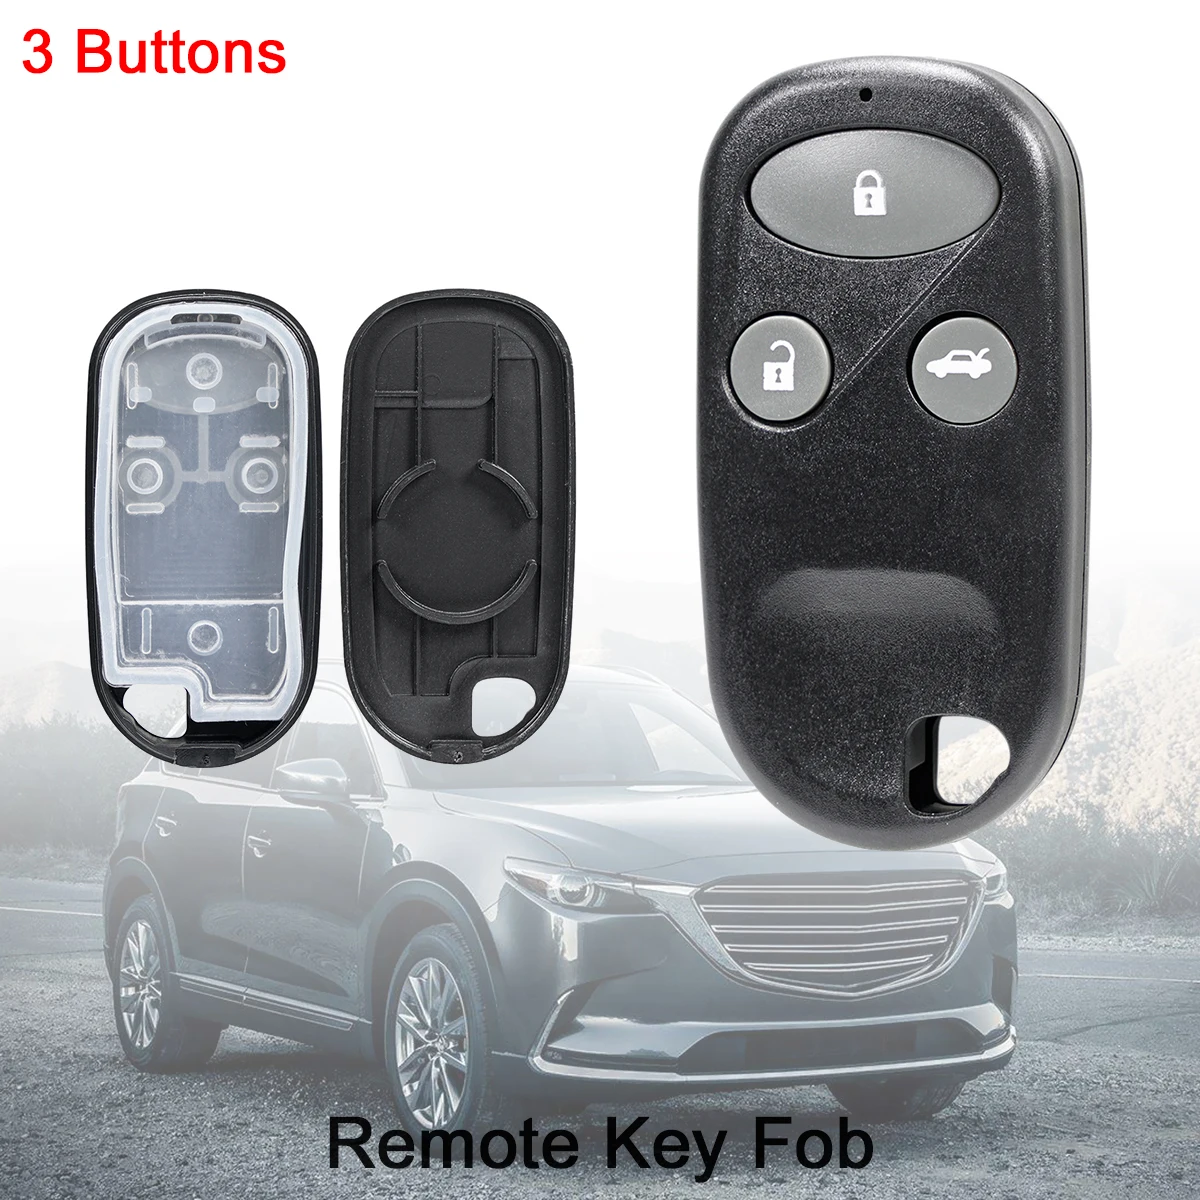 3 Button Case Keyless Entry Remote Key Fob Shell for Honda Civic CRV Accord Jazz 2003 2004 2005 2006 2007 2008 2009 2010 2011